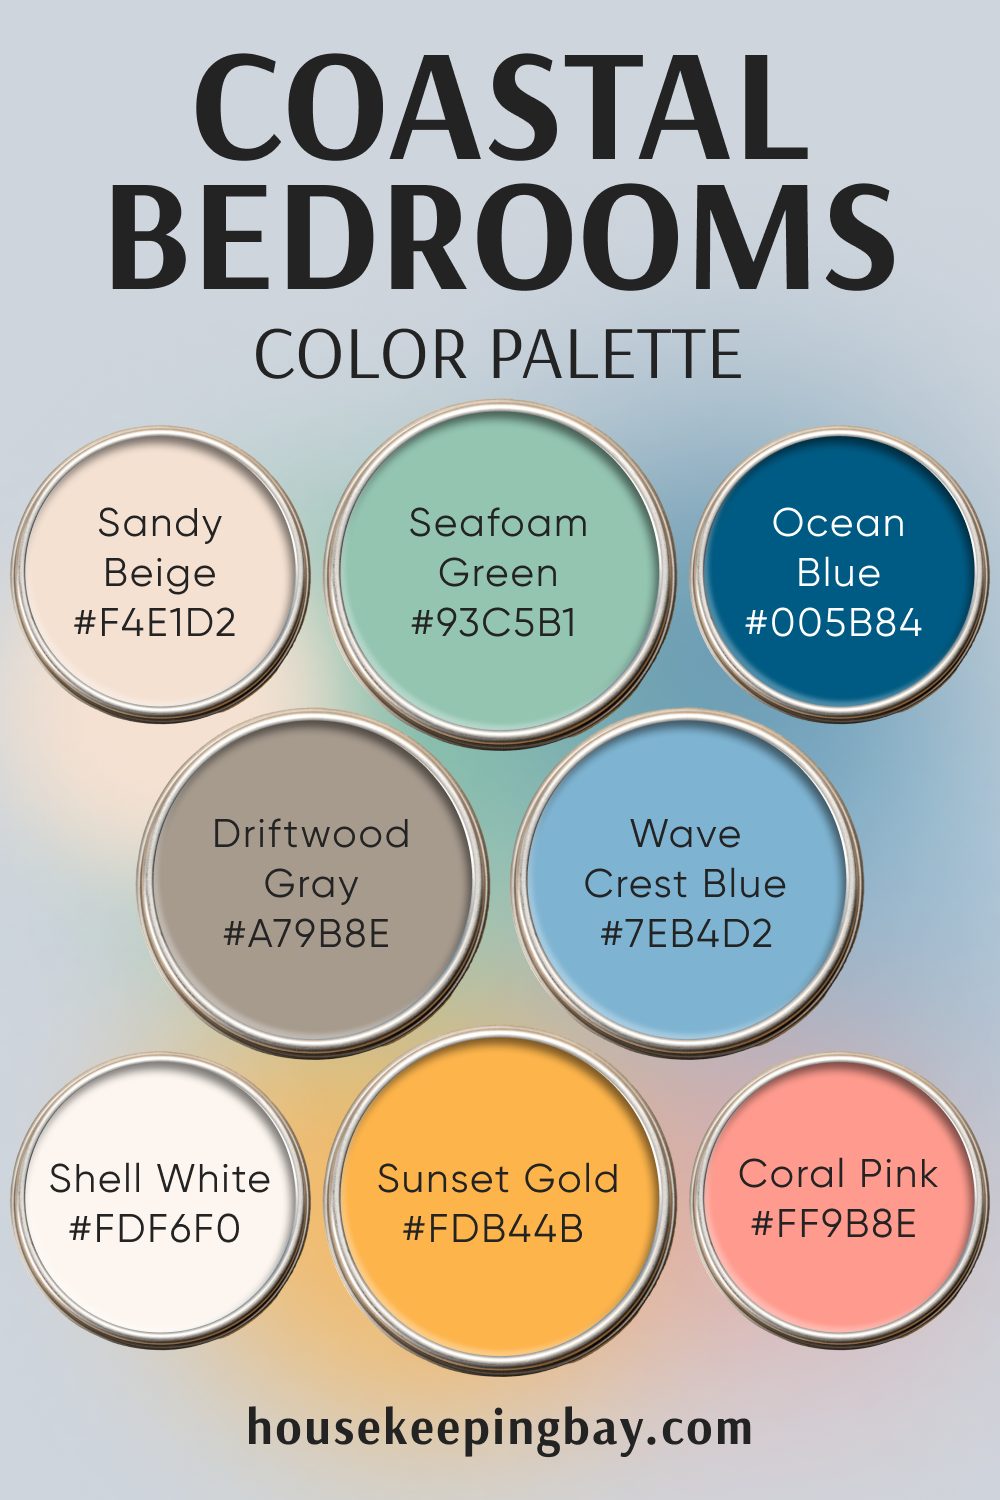 Coastal Bedrooms - Color palette